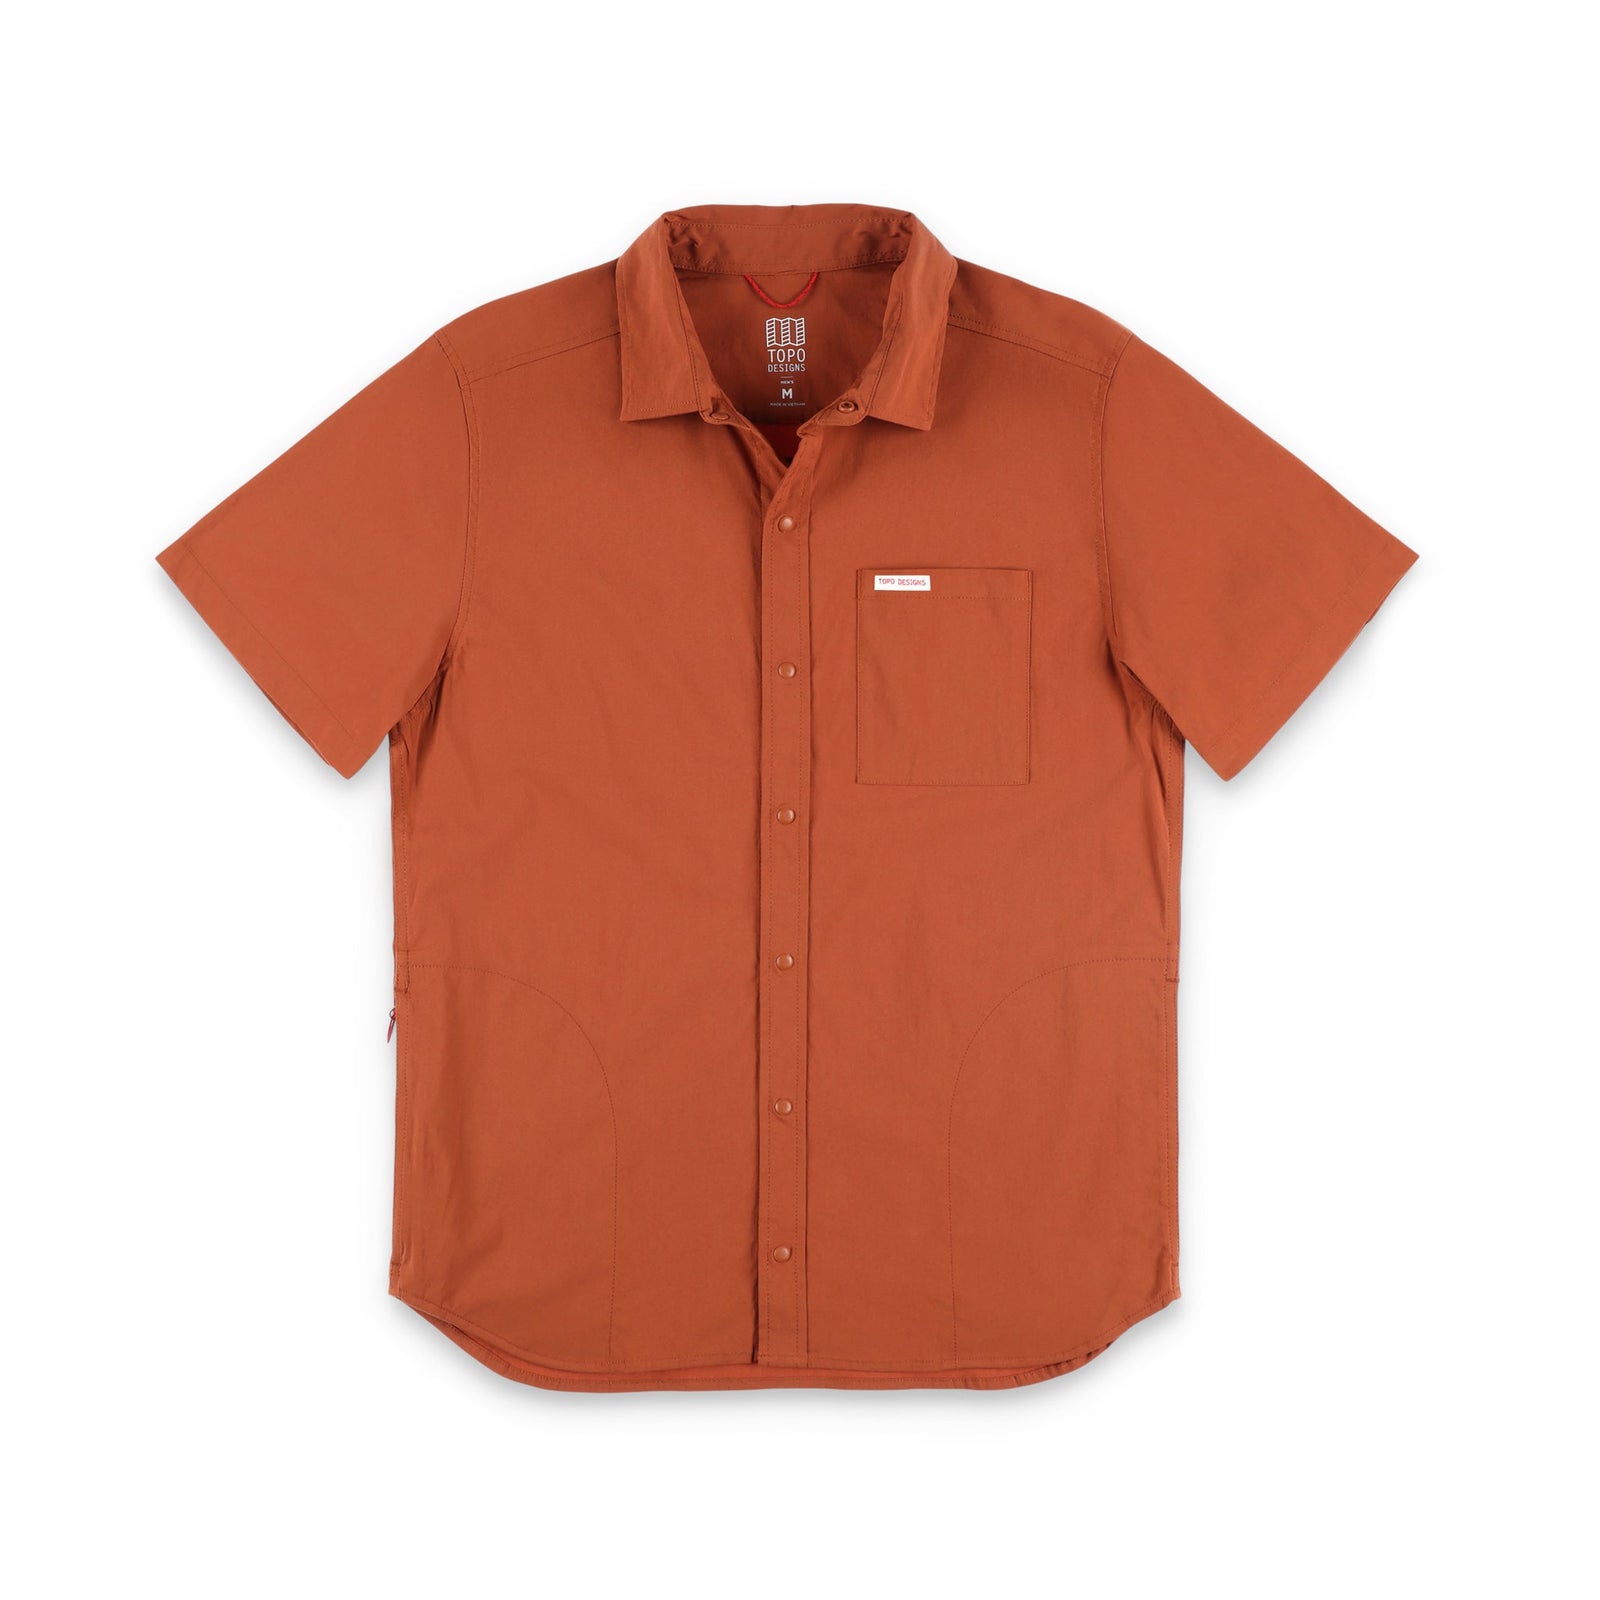 Topo Designs Men's Global Shirt Short Sleeve 30+ UPF rated travel shirt in "Brick" orange.